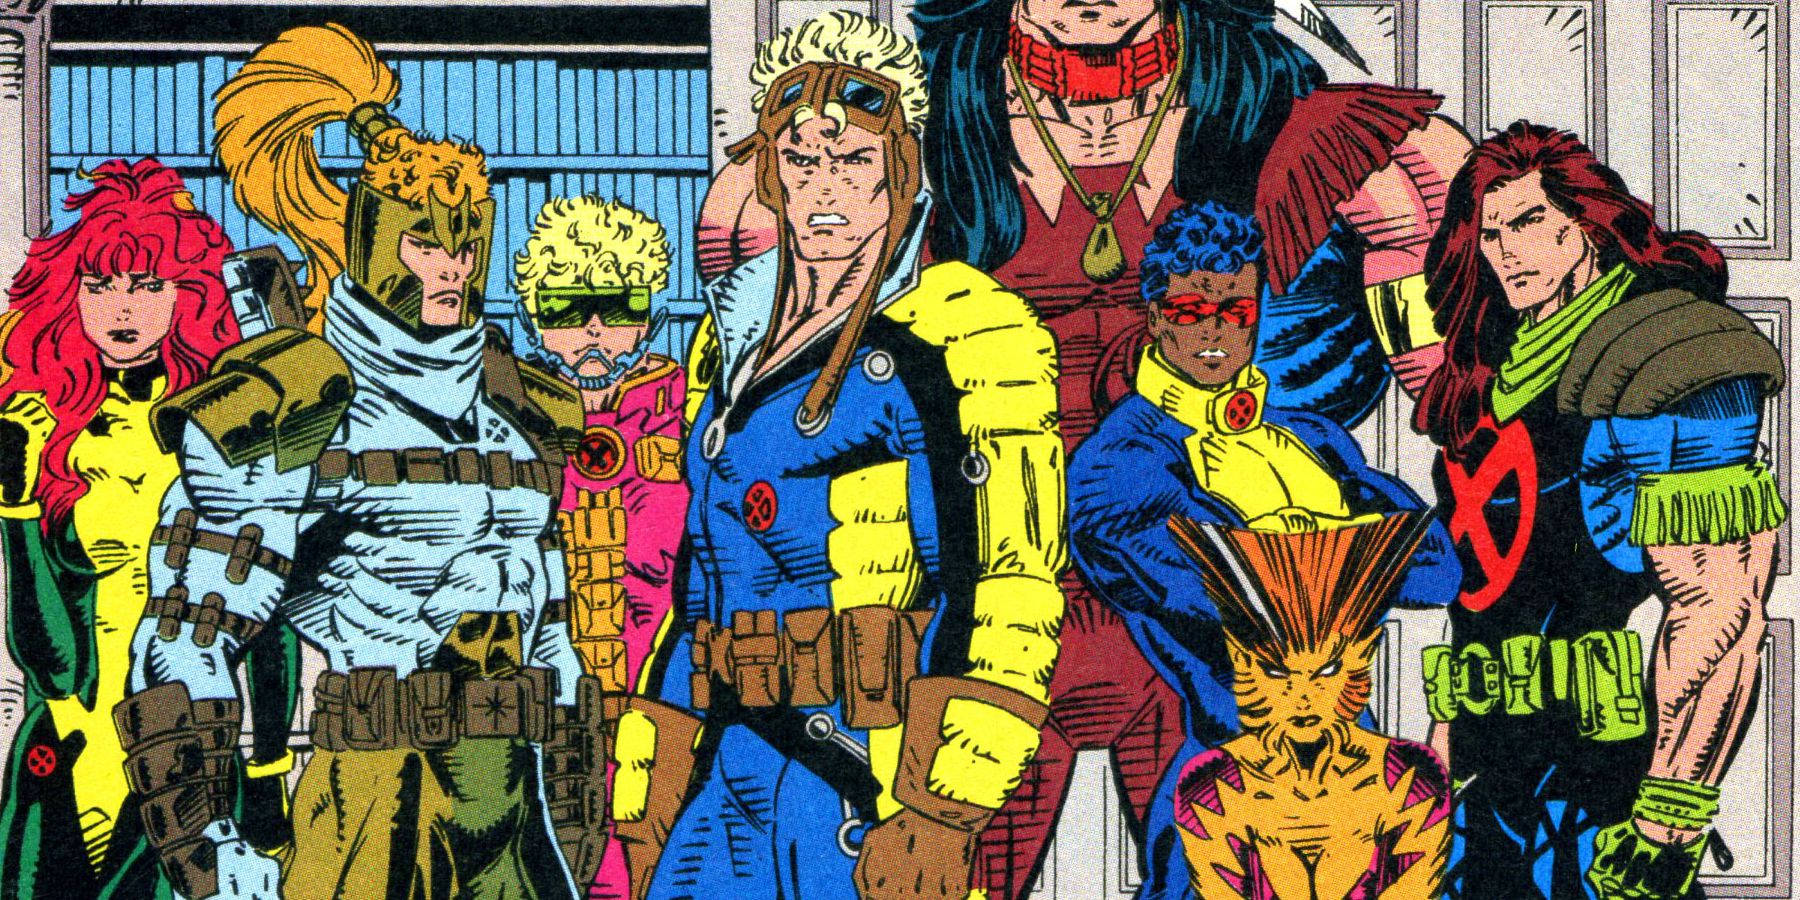 X-Force - Shatterstar, Feral, Sunspot from Marvel Comics